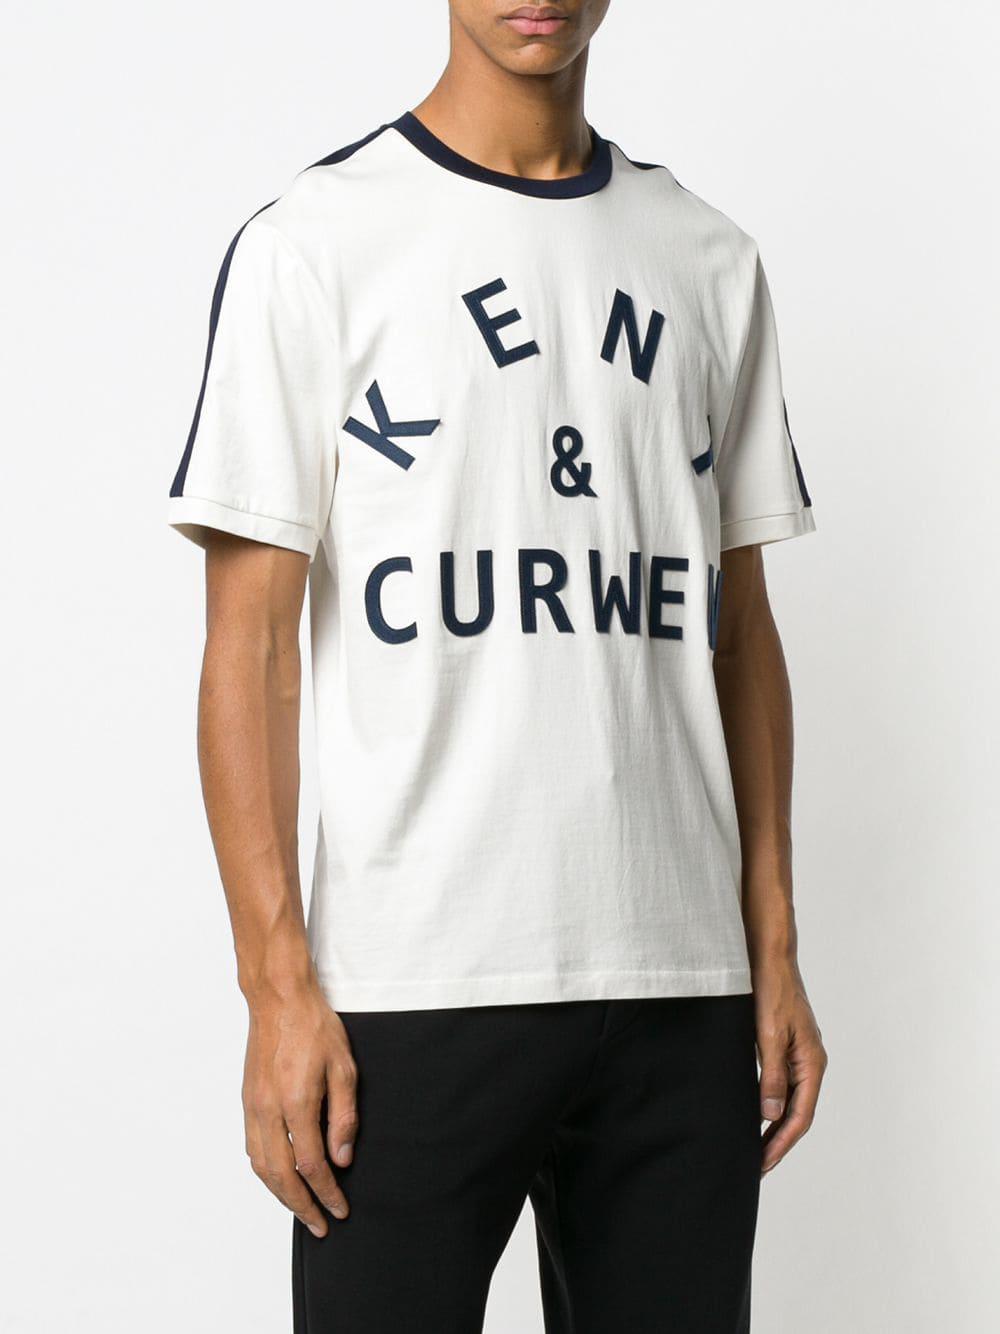 Lyst - Kent & Curwen Logo T-shirt in White for Men